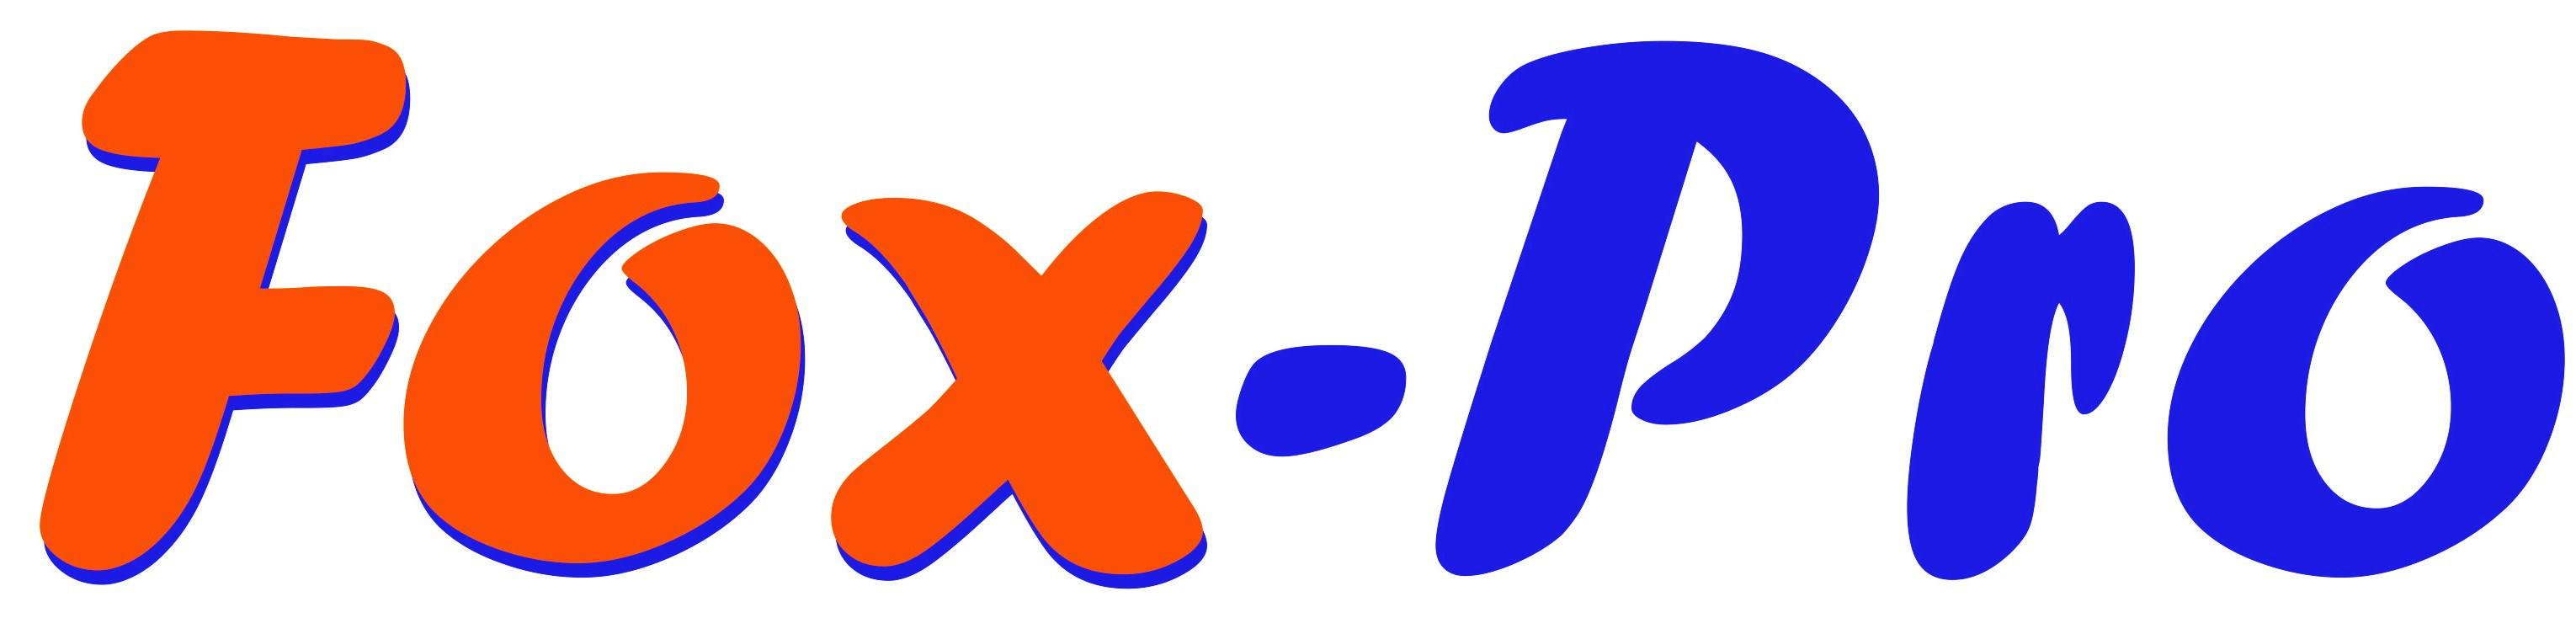 FOXPRO логотип. Fox компания. ООО бизнес Фокс. Фирма fox